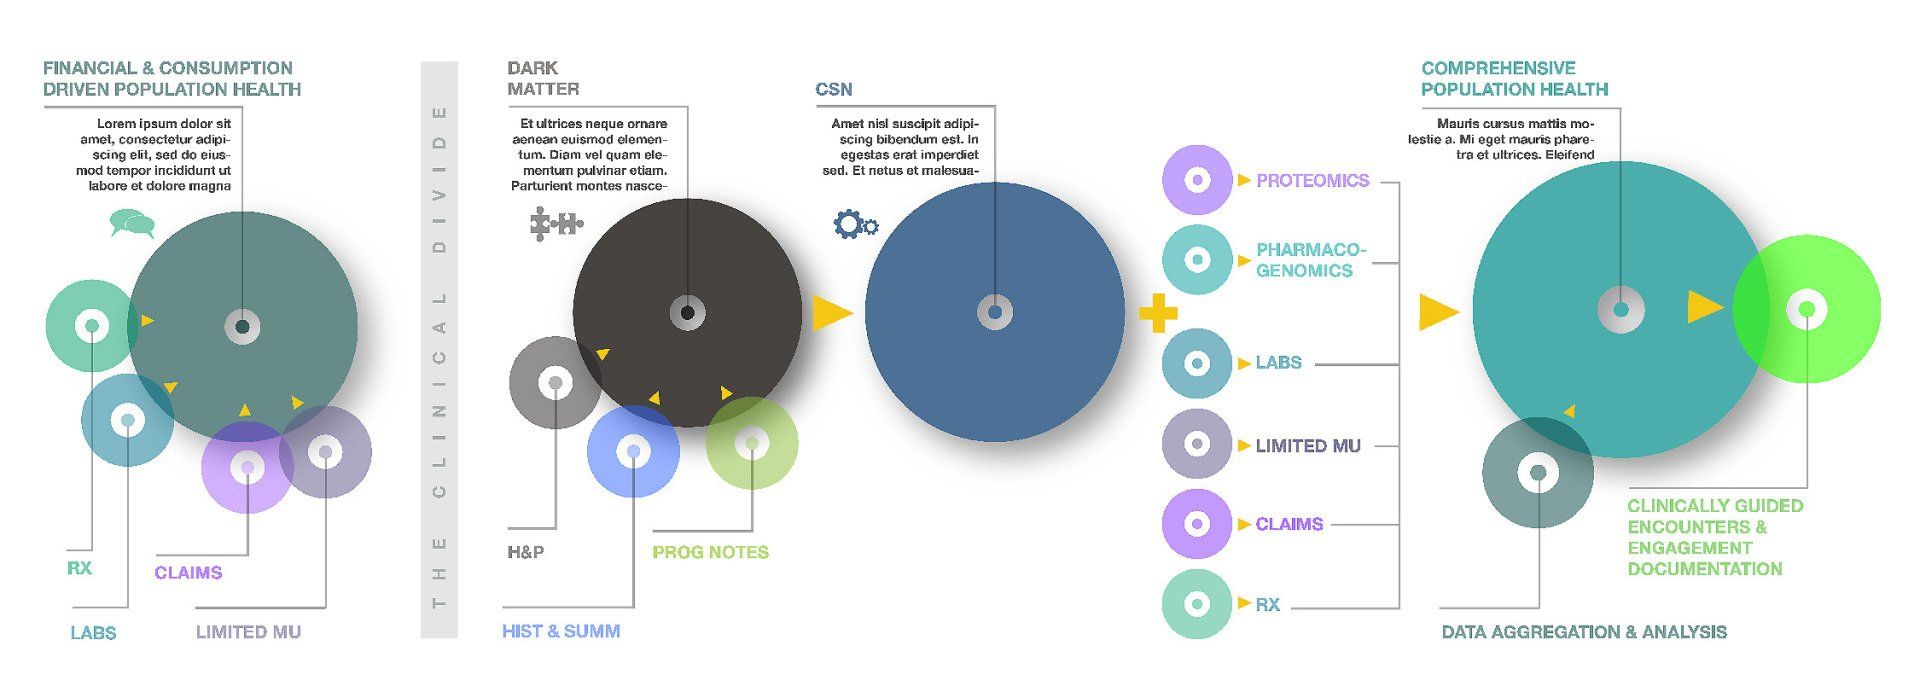 infographic explaing complex system